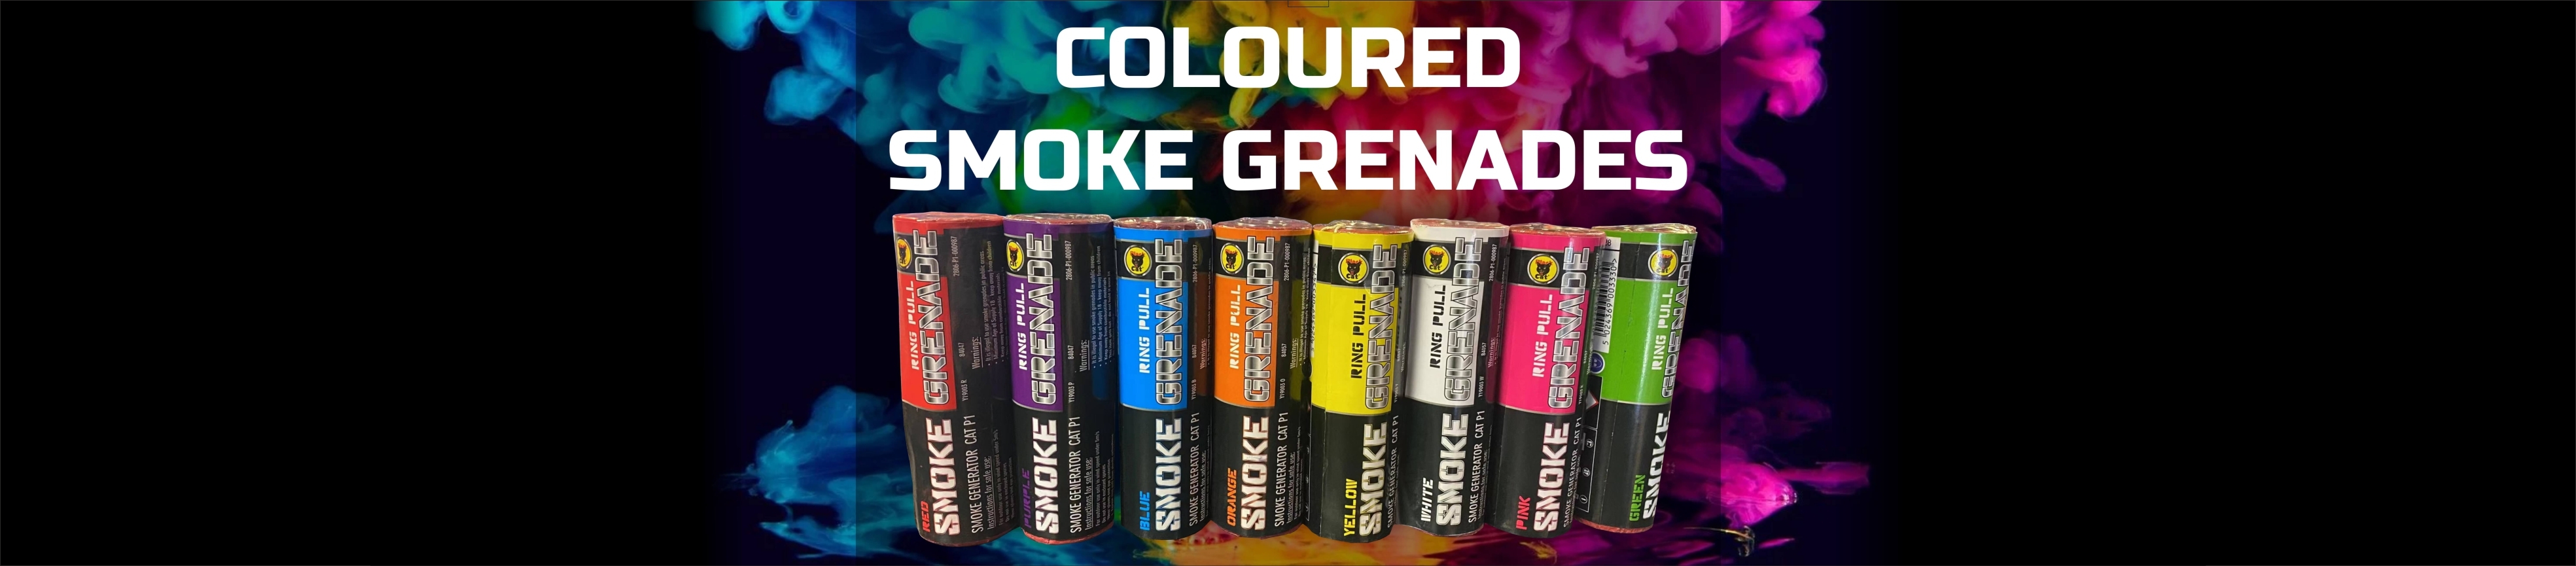 Coloured Smoke Grenades